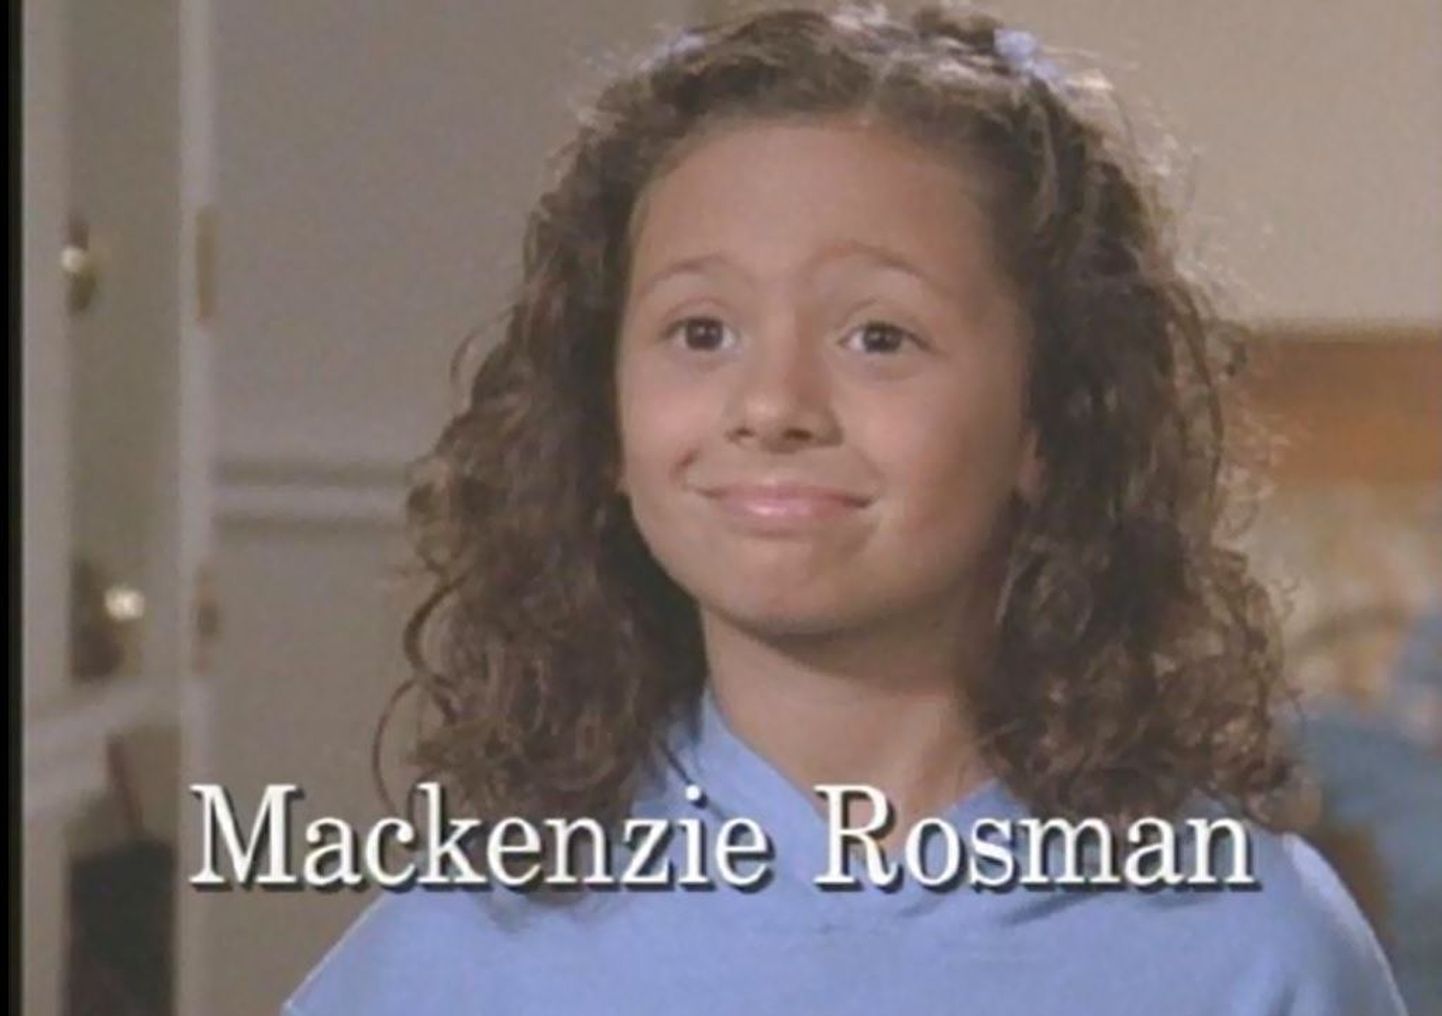 Mackenzie Rosman